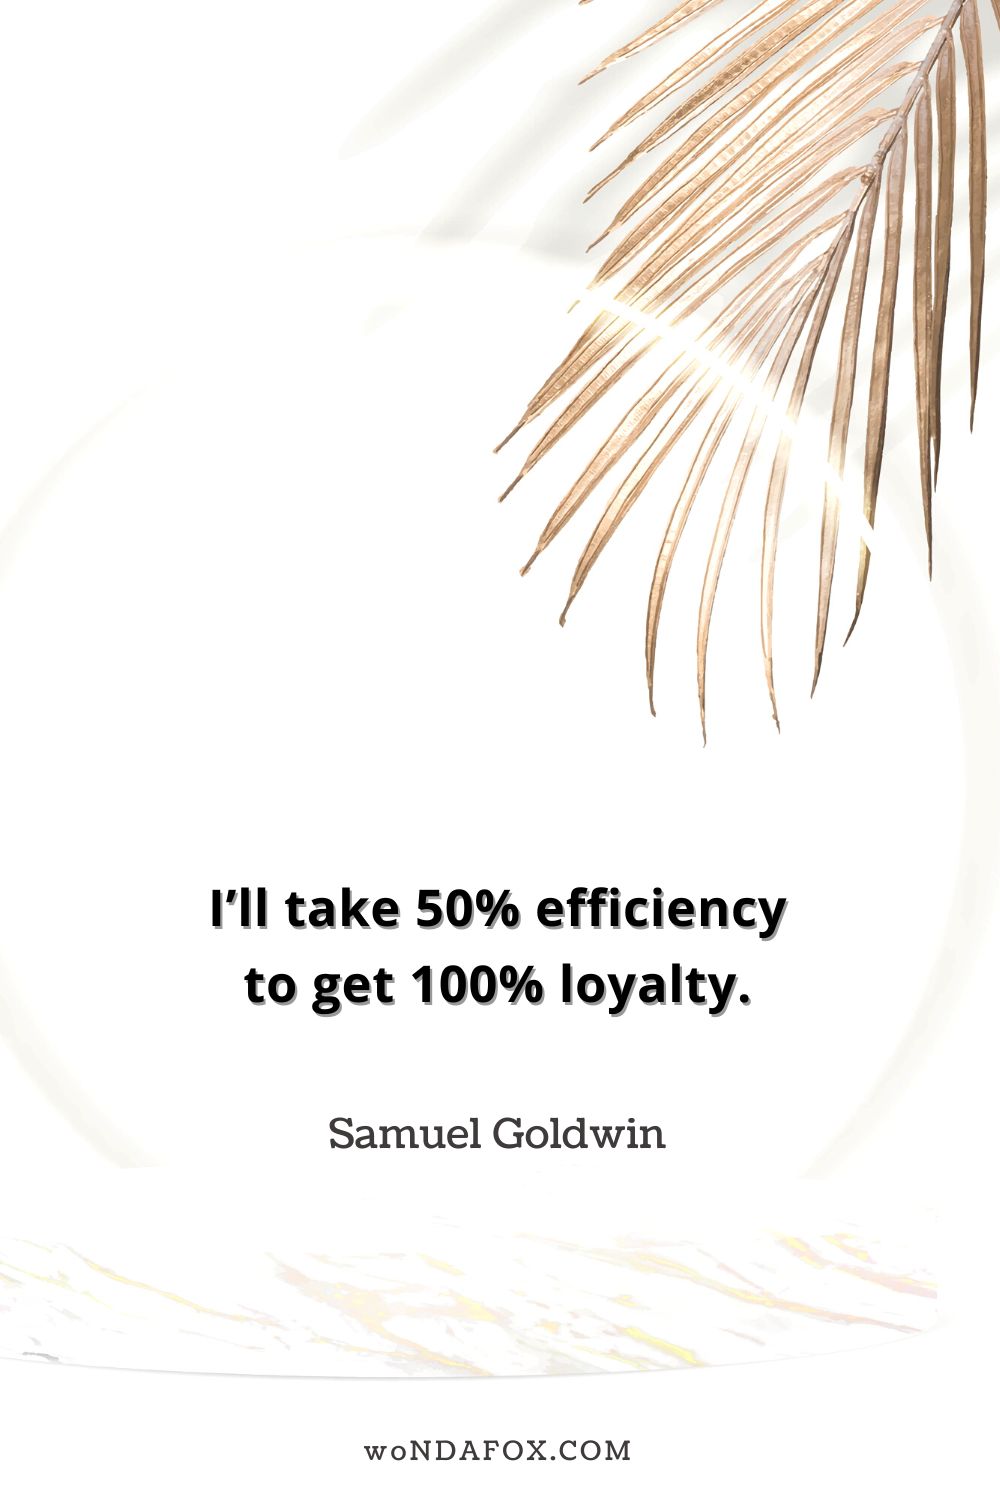 “I’ll take 50% efficiency to get 100% loyalty.” 